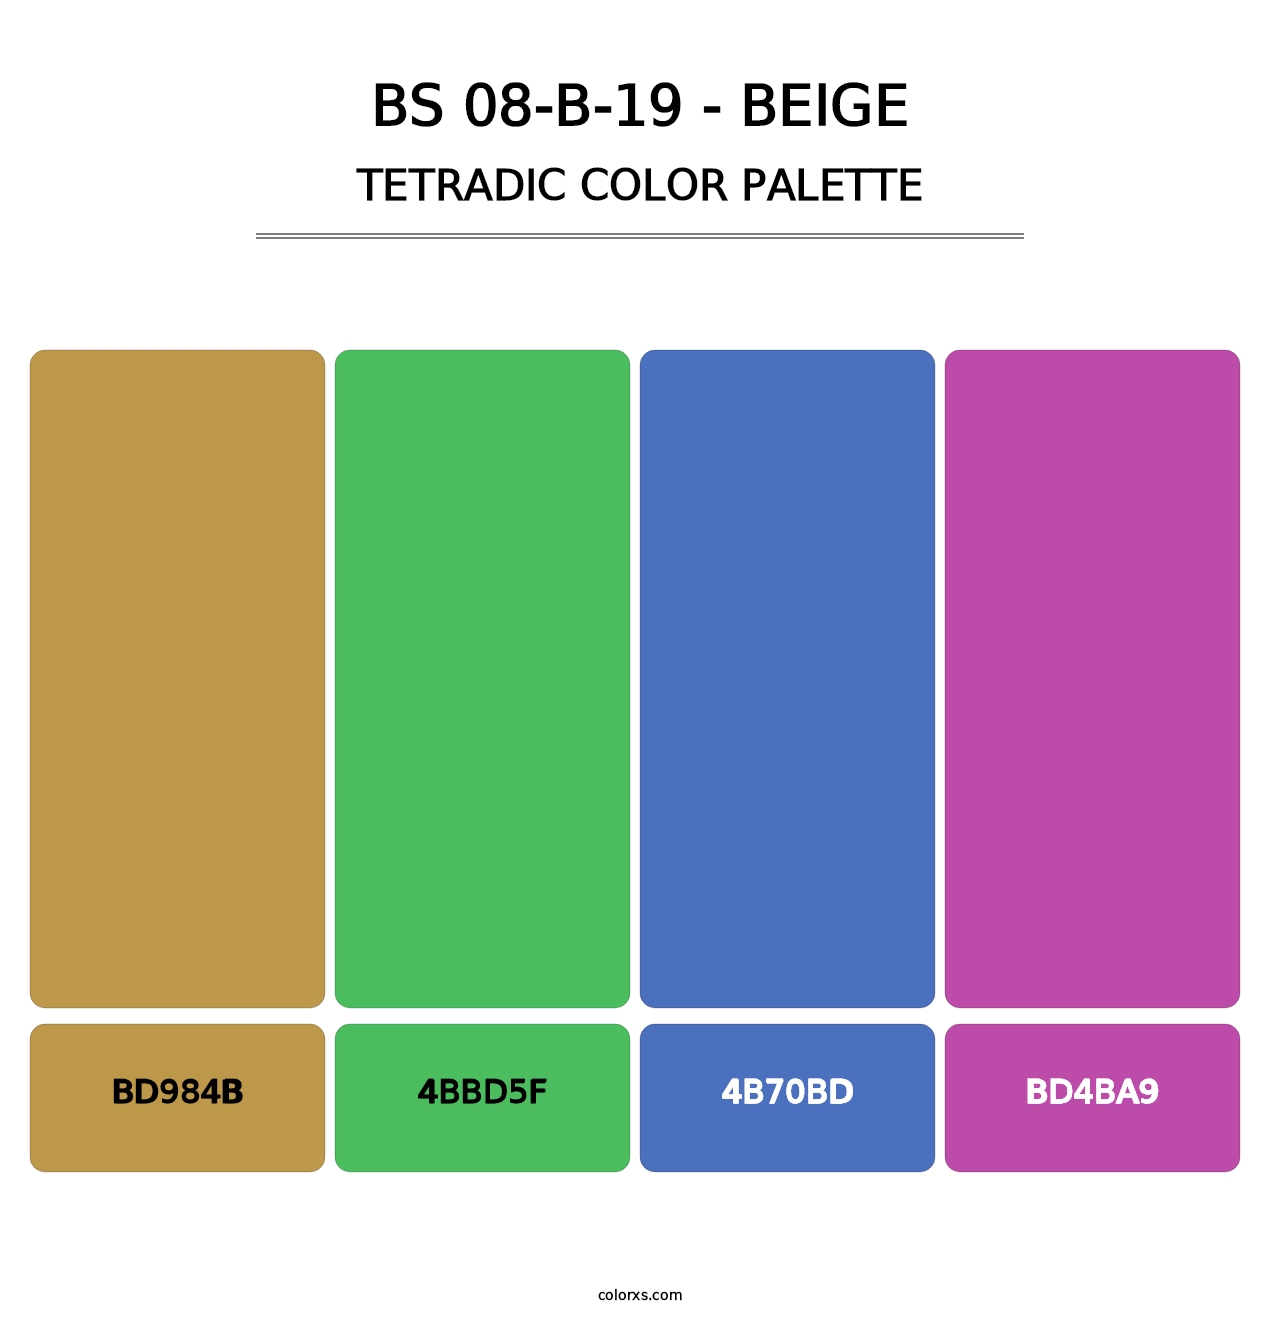 BS 08-B-19 - Beige - Tetradic Color Palette